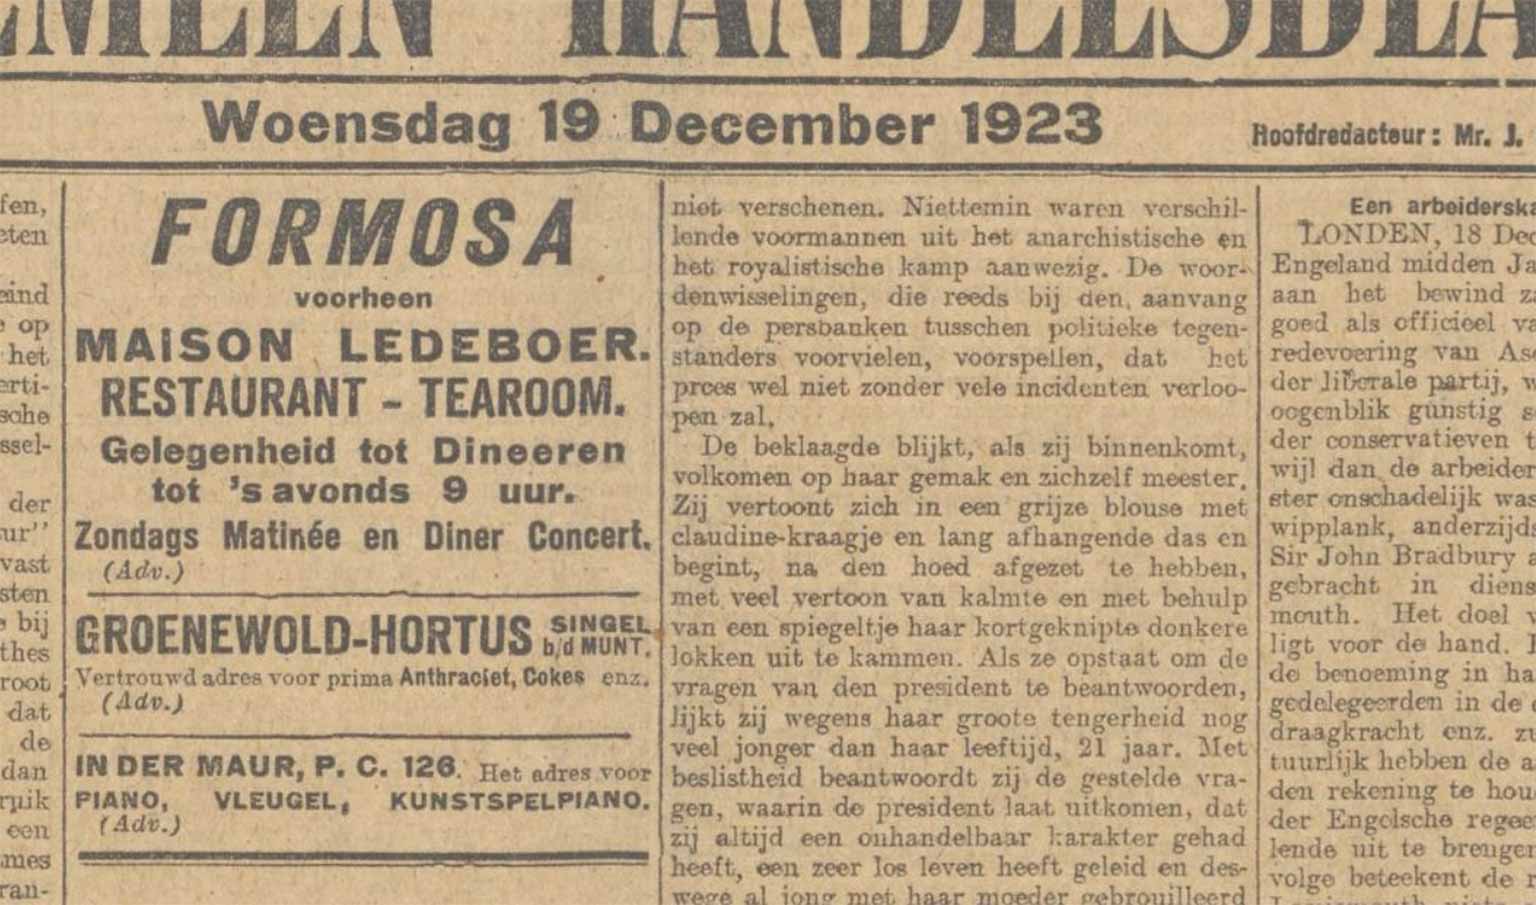 Advertisement for Formosa, 19 December 1923 in Algemeen Handelsblad